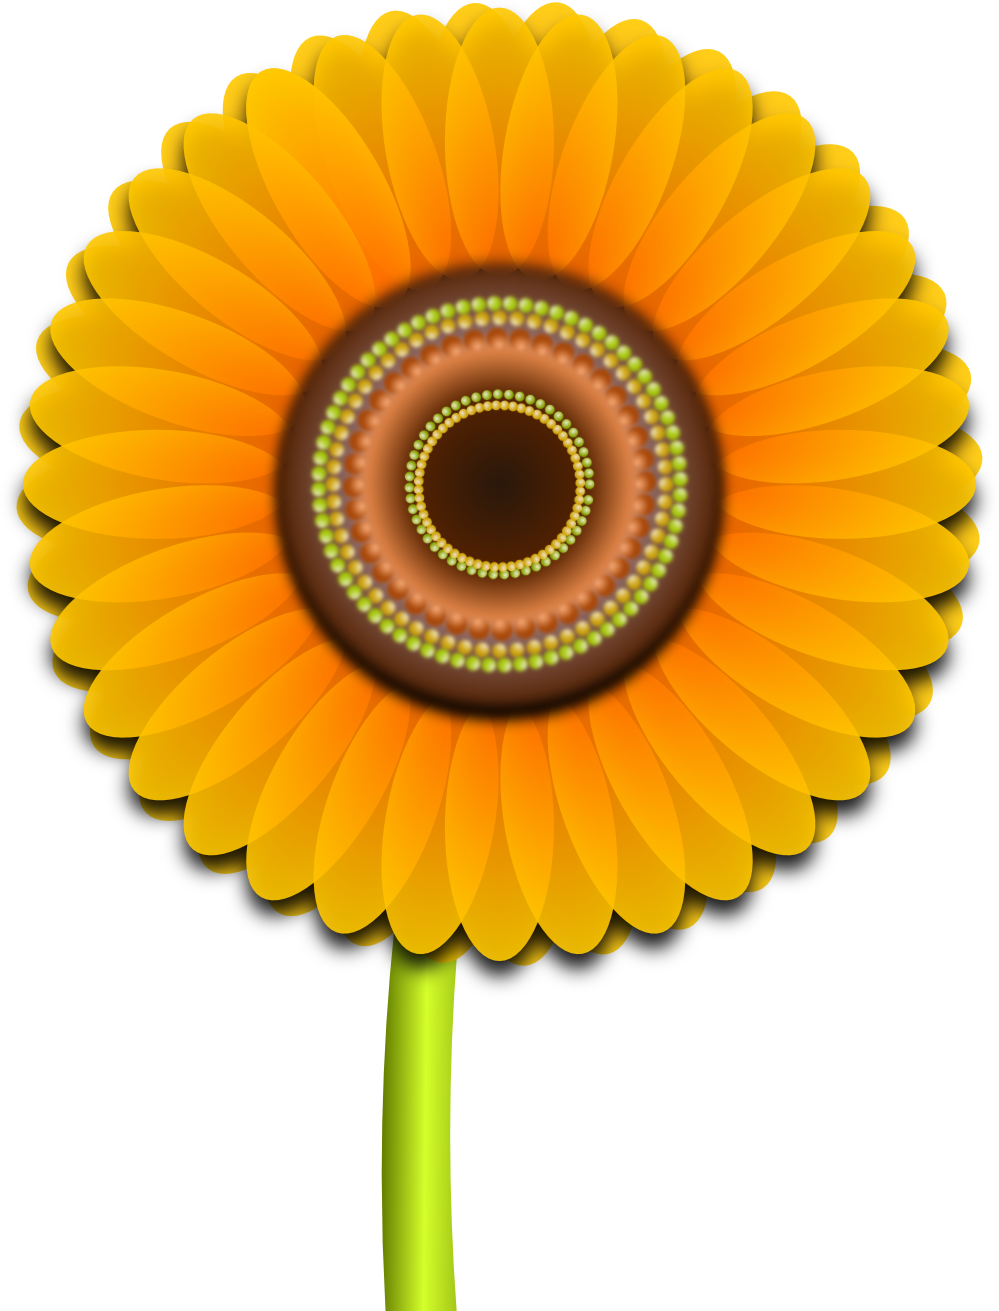 Nature Sunflower xochi.info supercalifragilisticexpialidocious ...